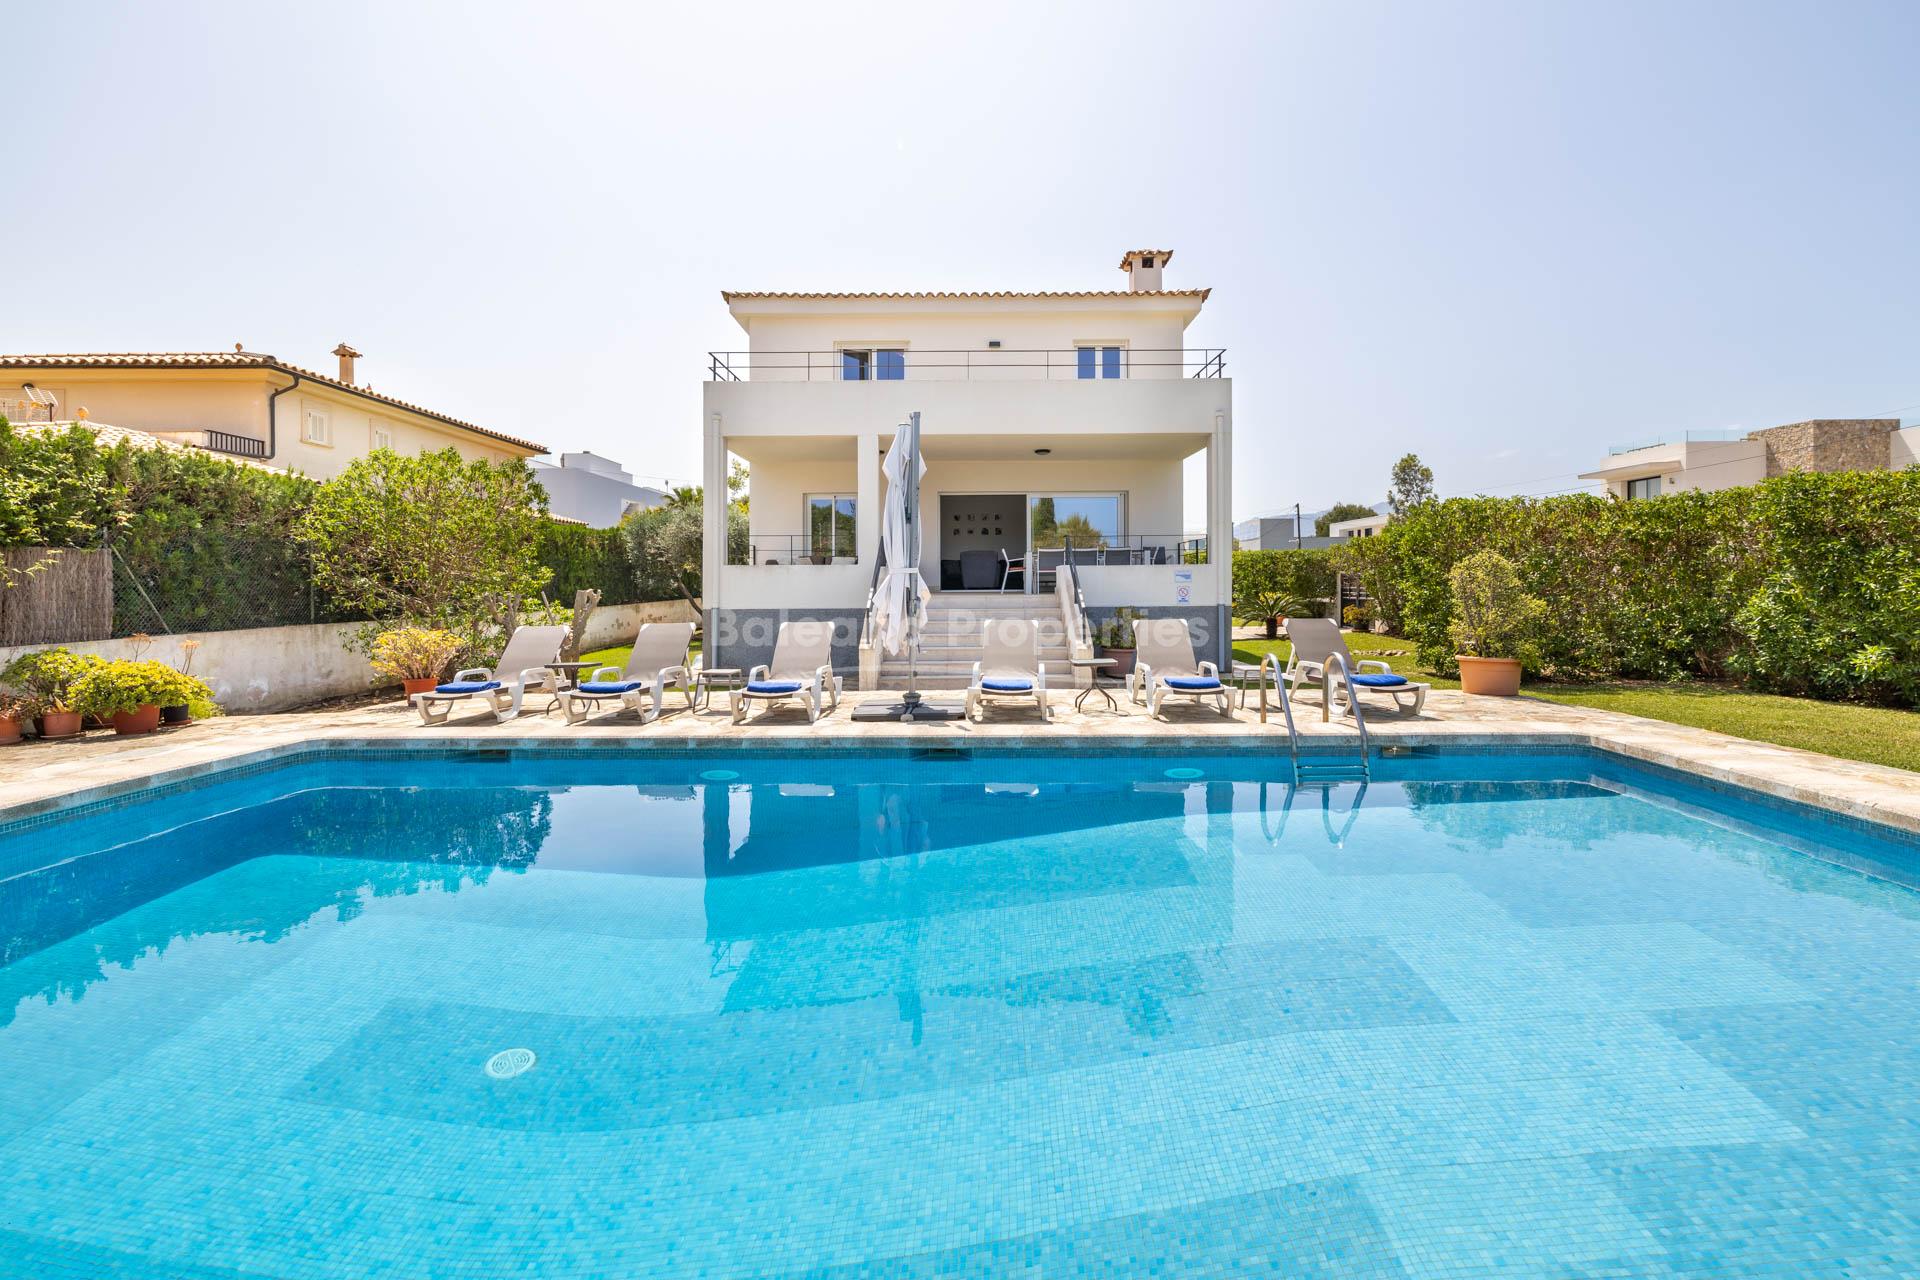 Modern villa with holiday license for sale near the sea in Puerto Pollensa, Mallorca